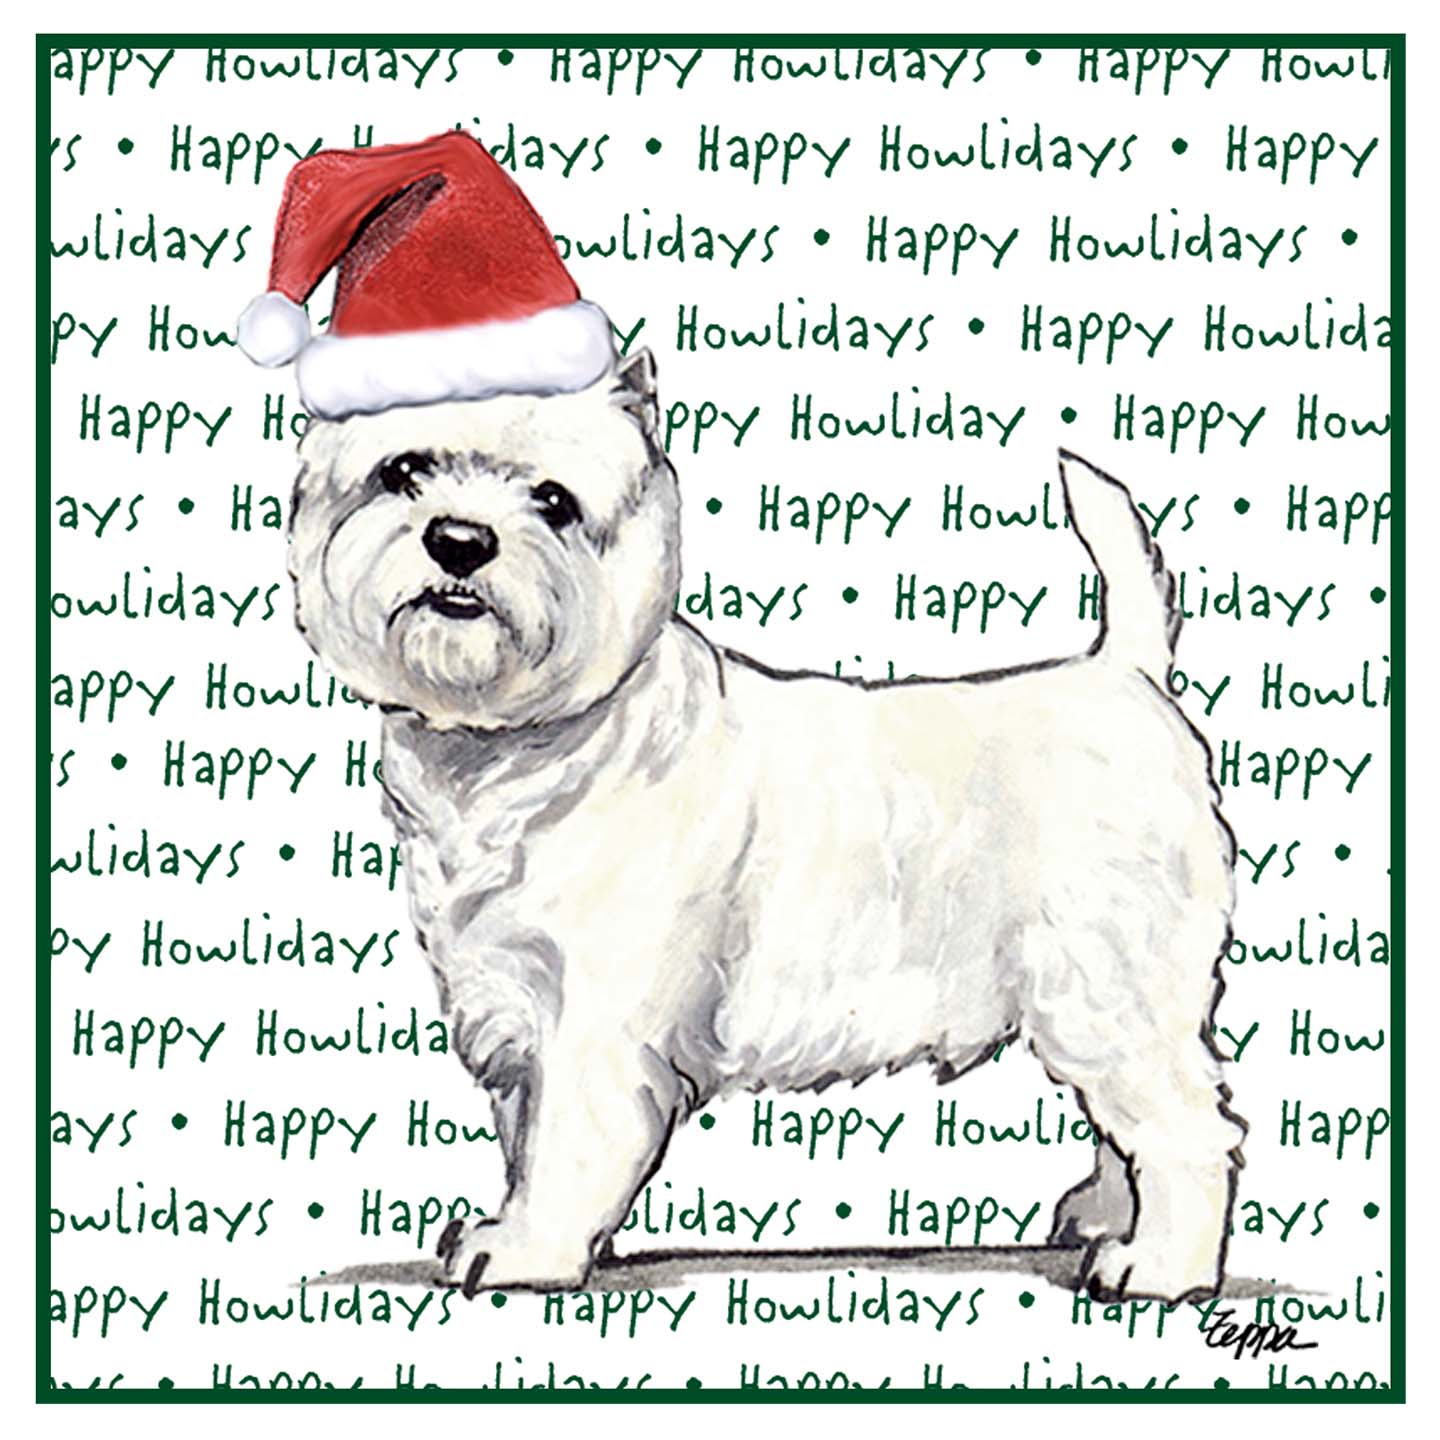 West Highland White Terrier Happy Howlidays Text - Adult Unisex Hoodie Sweatshirt